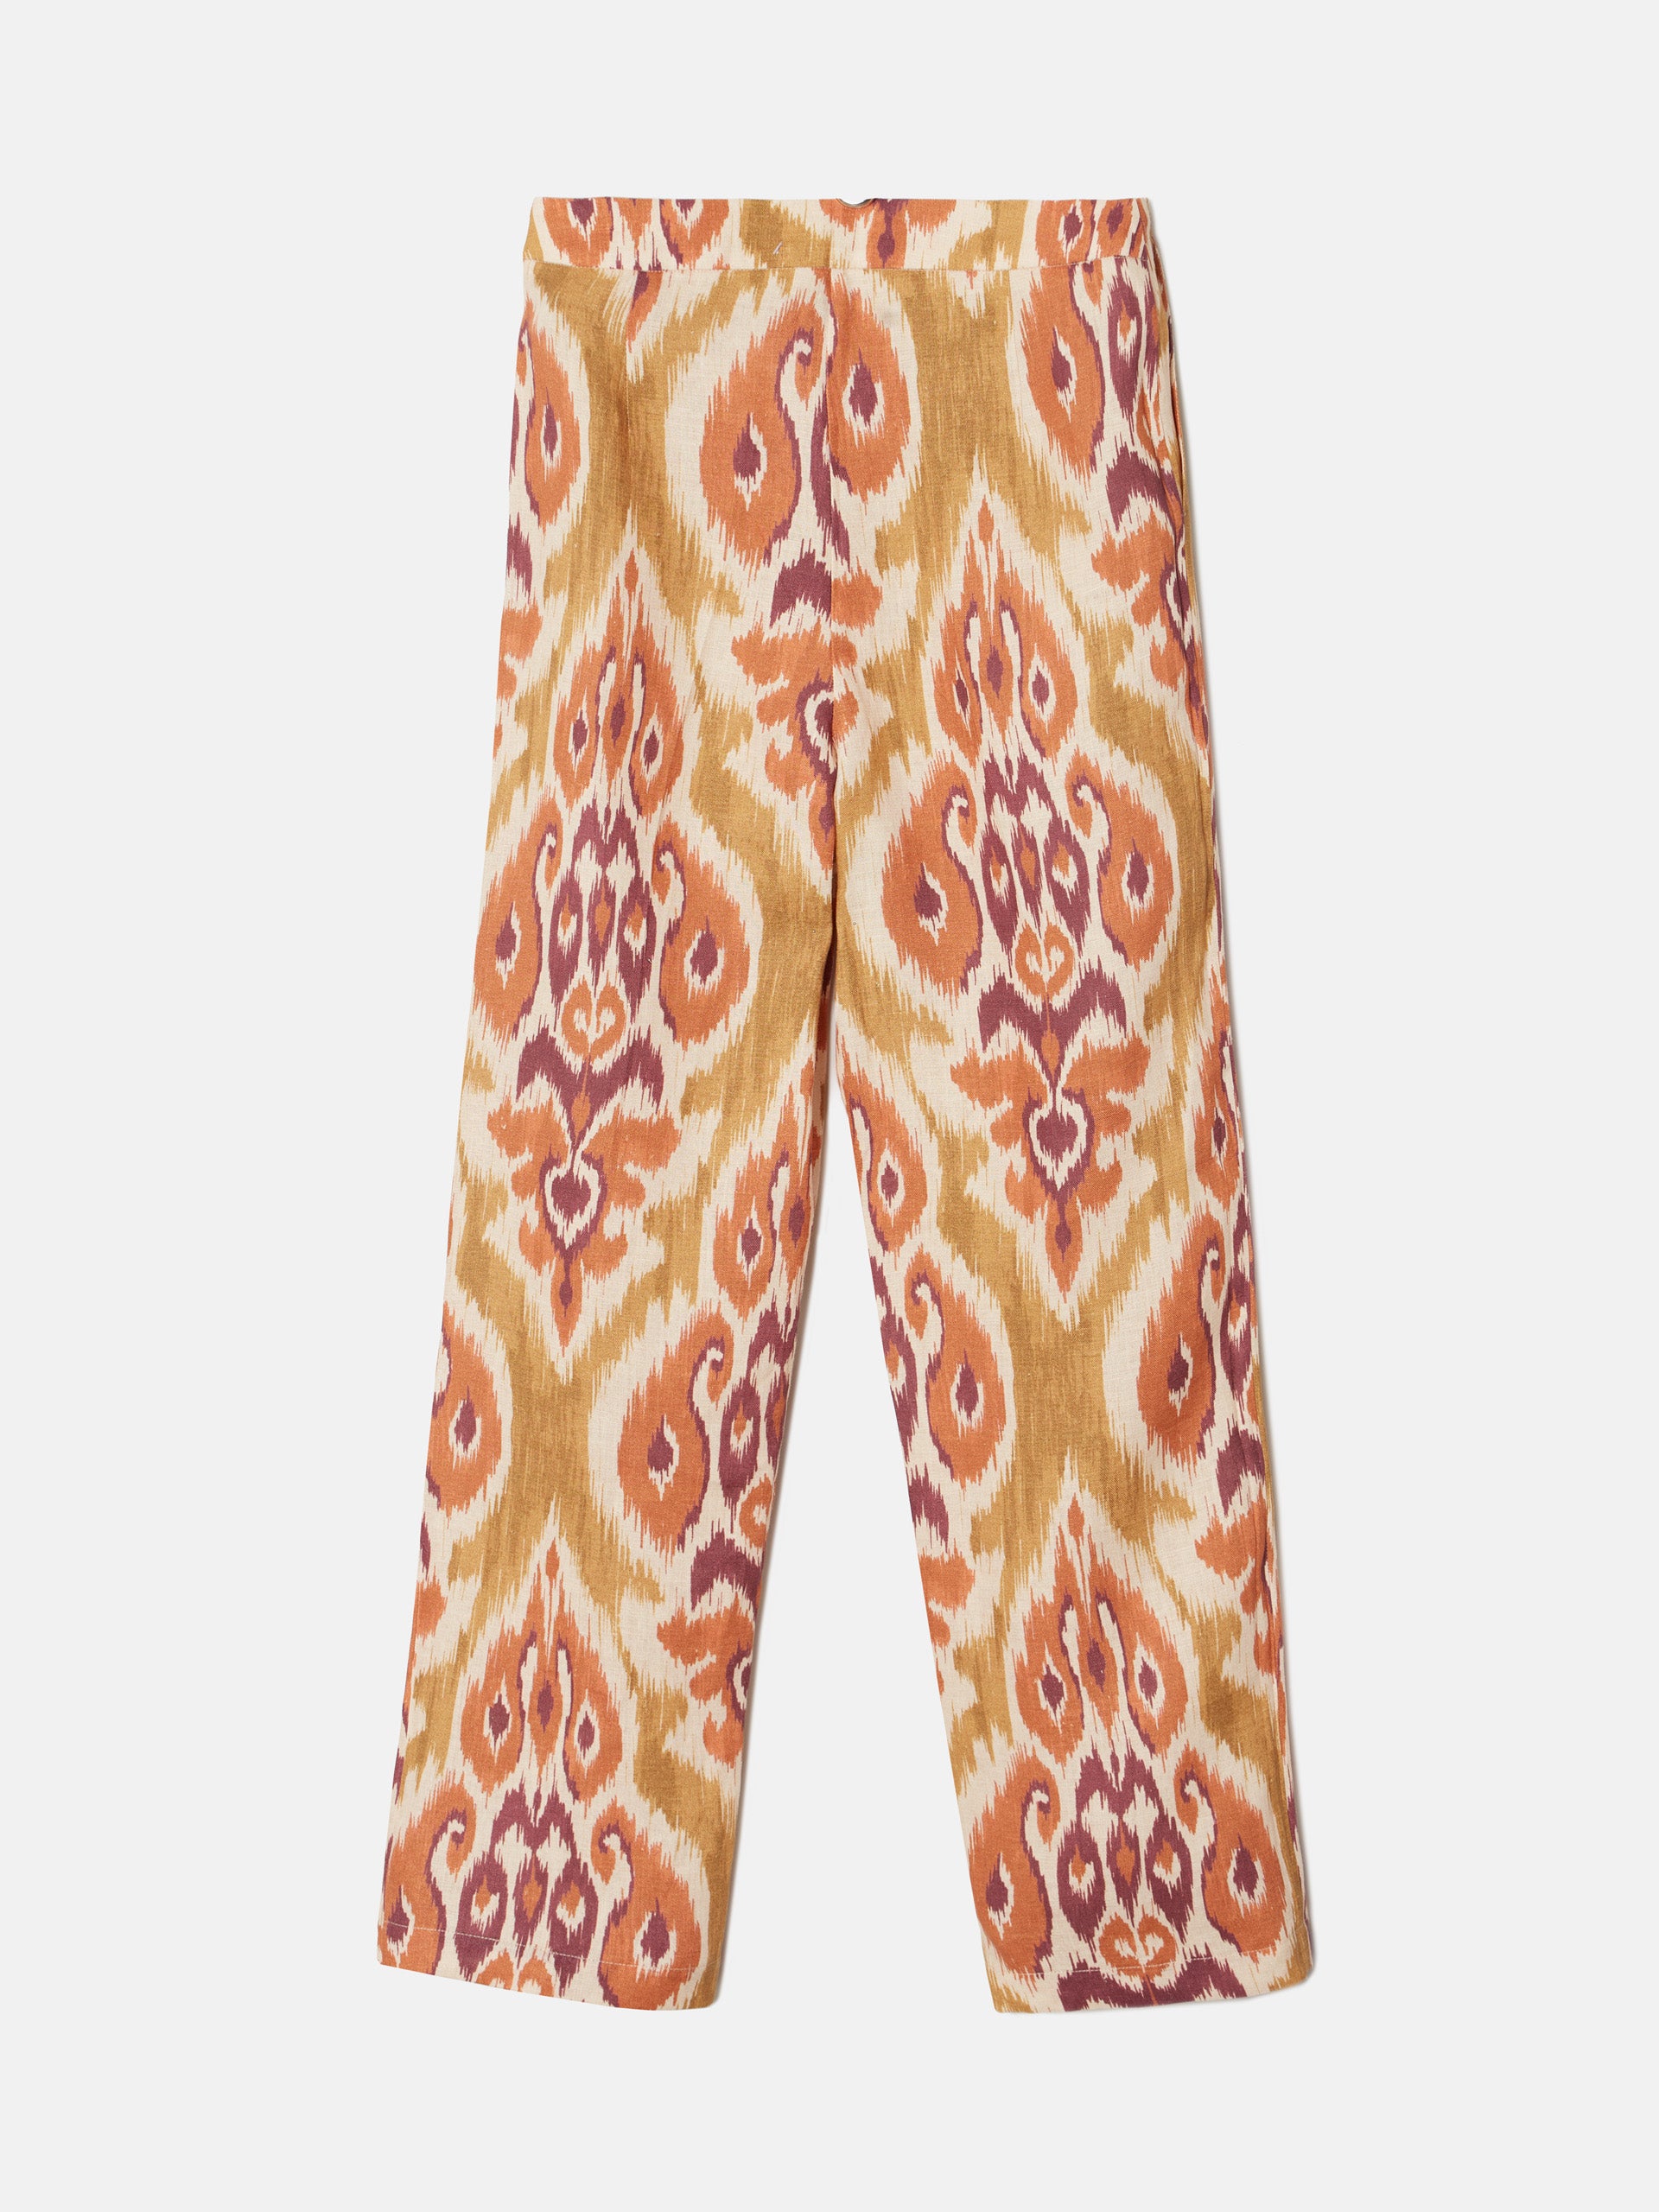 Camel ikat printed linen pants